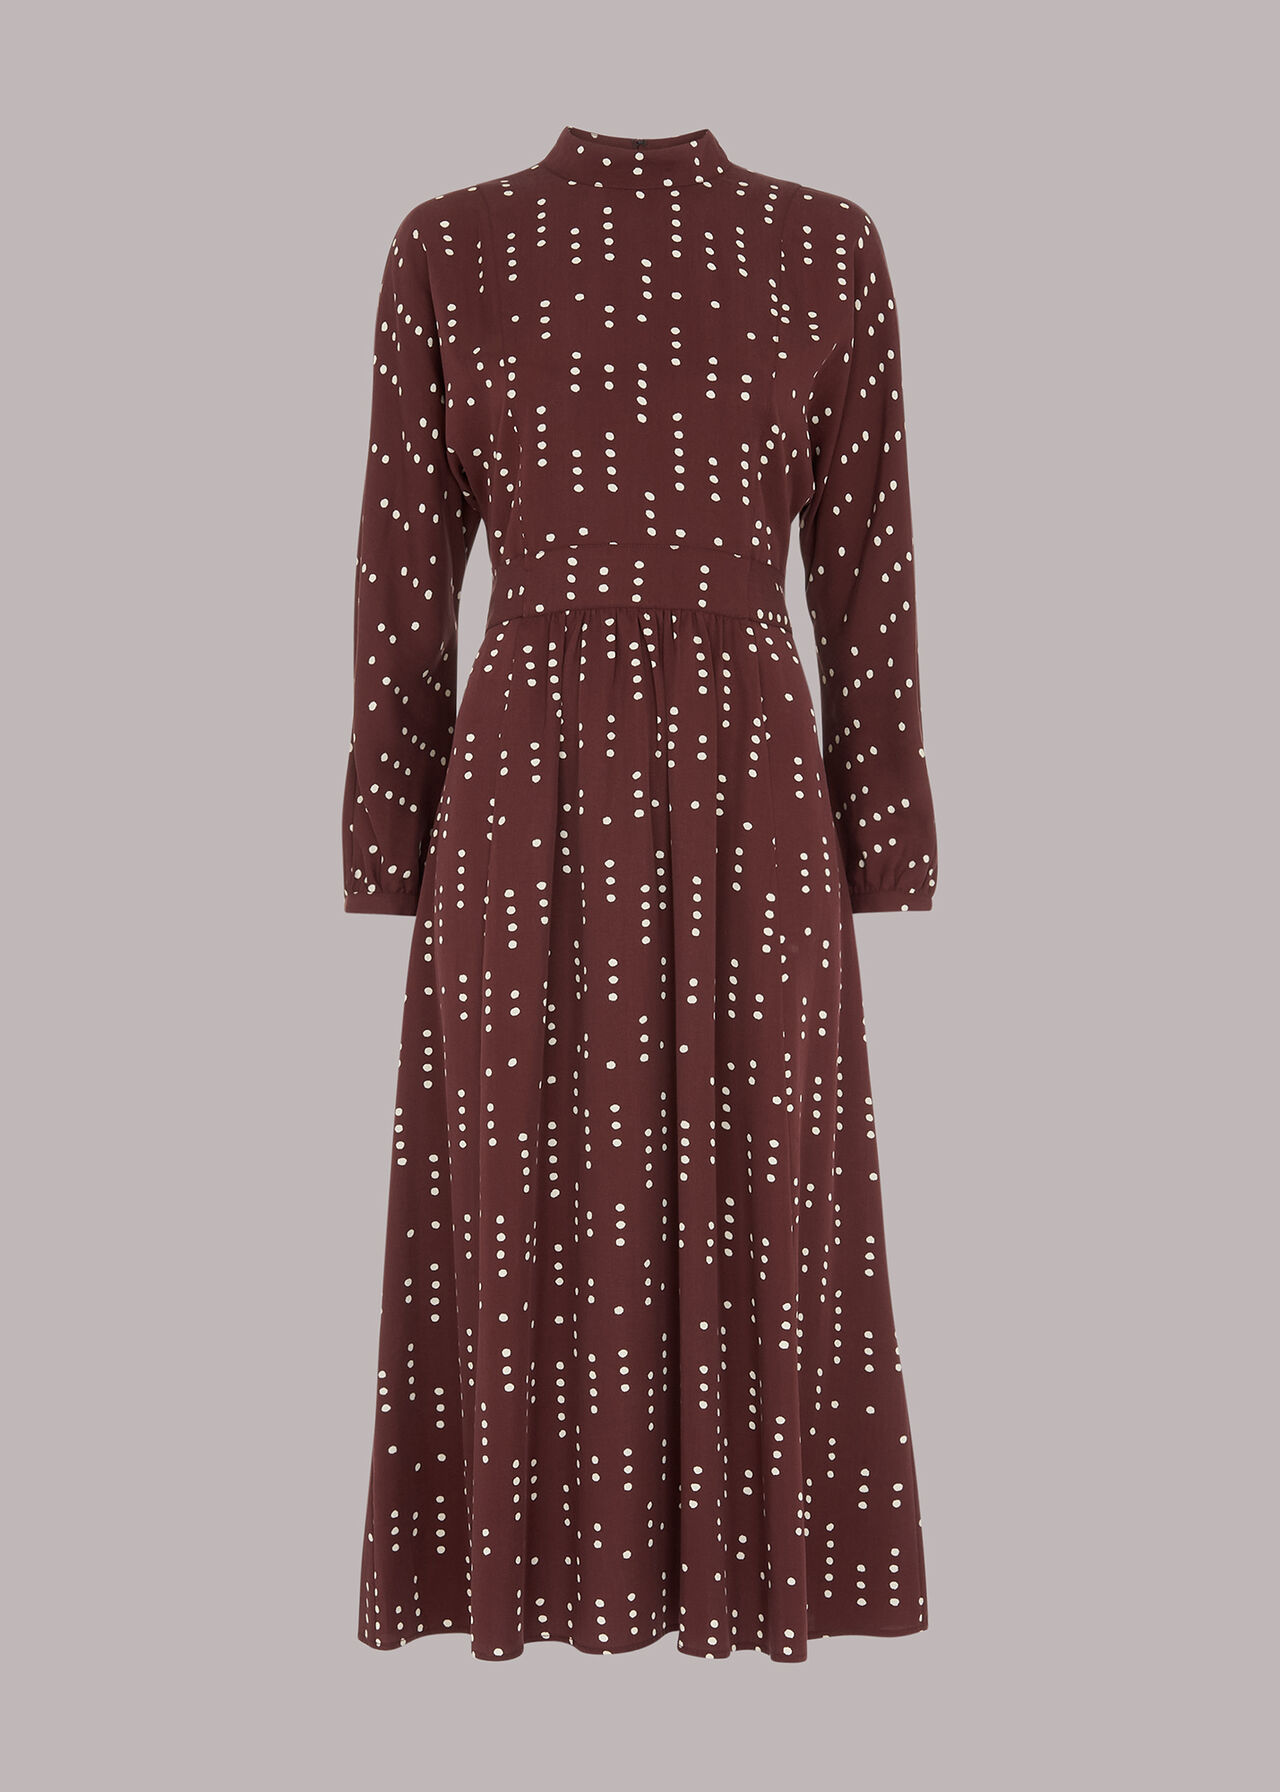 Theodora Dash Dot Print Dress